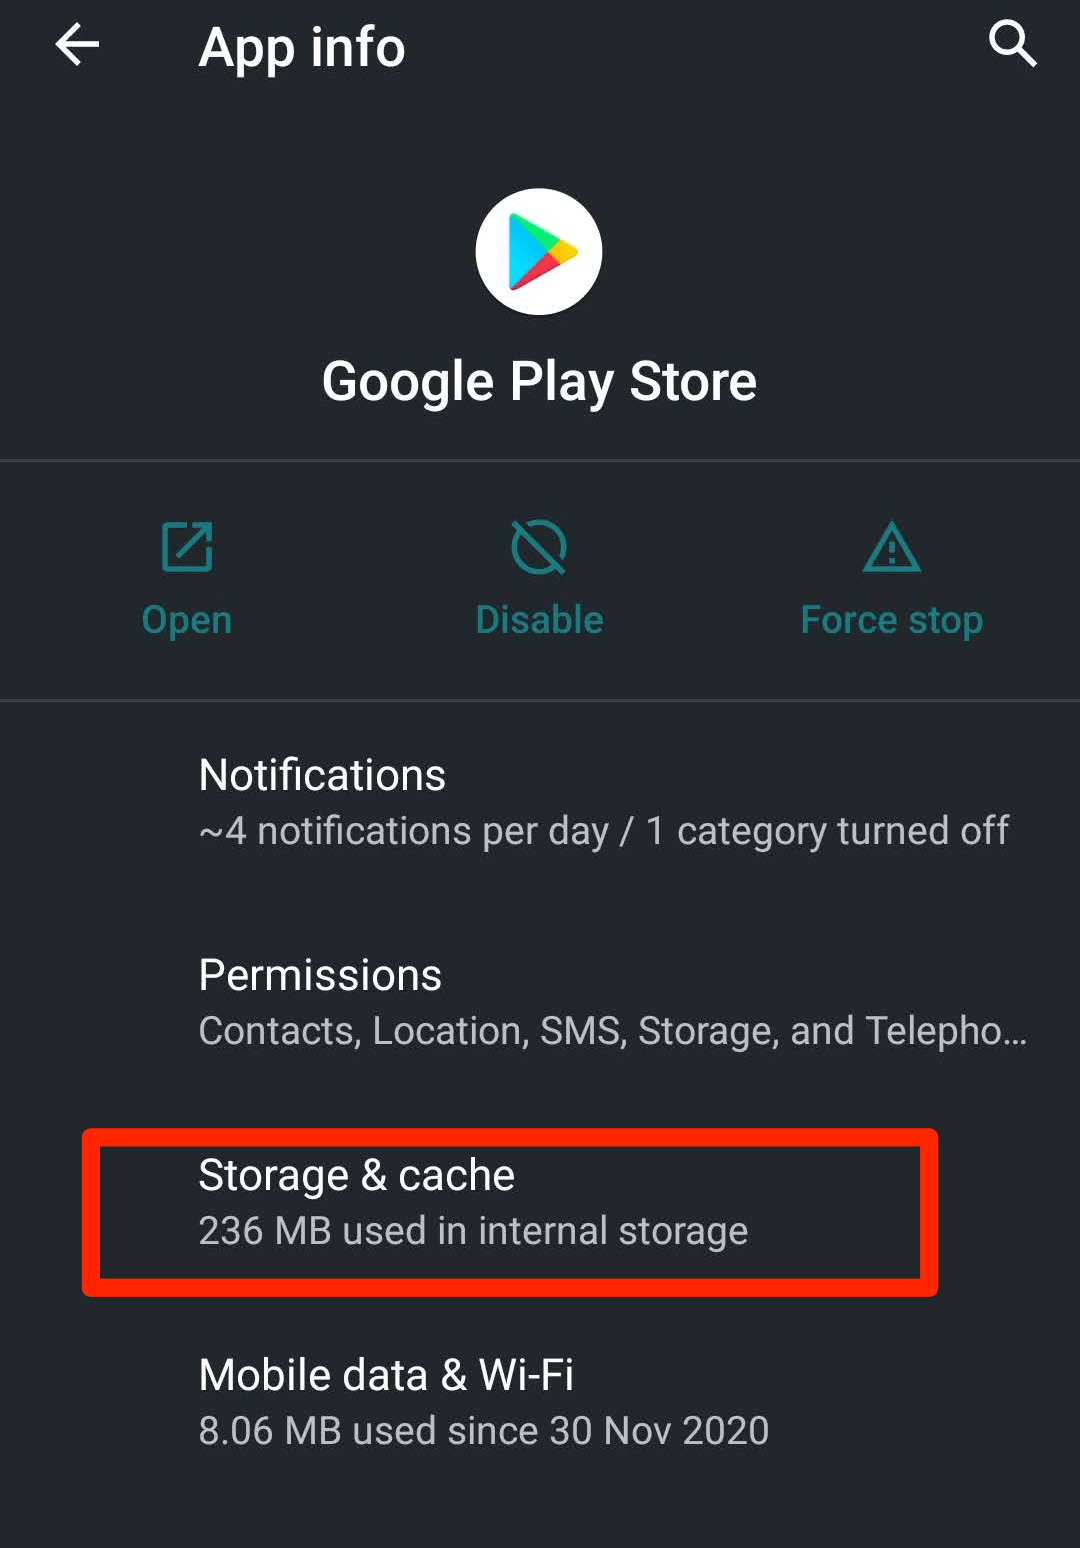 Google Play Store App Info Page with Storage menu